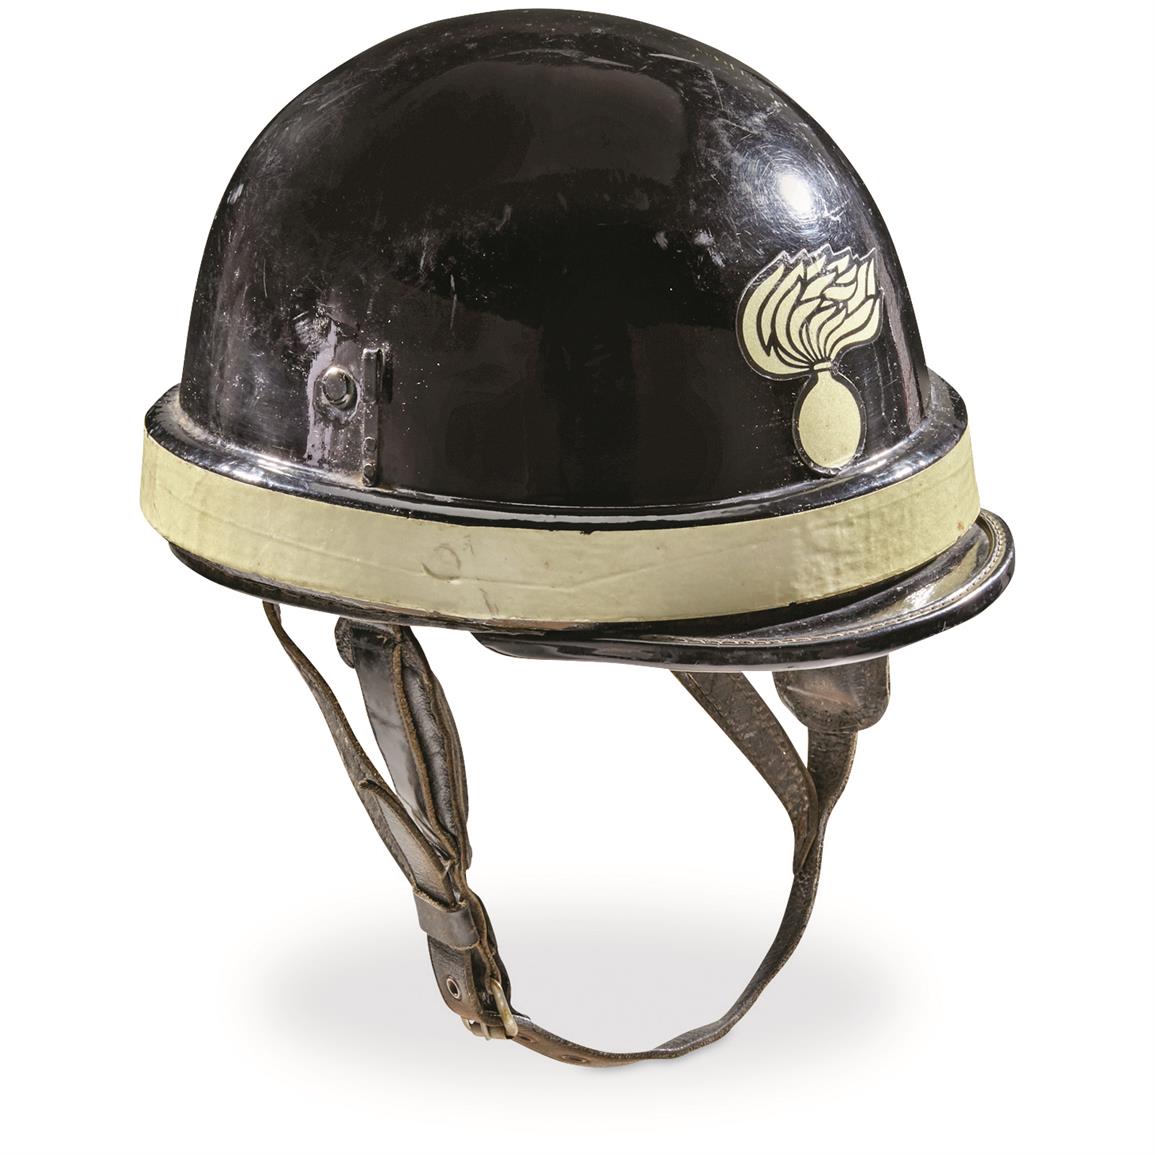 Italian Police Surplus 60s era Motorcycle Helmet